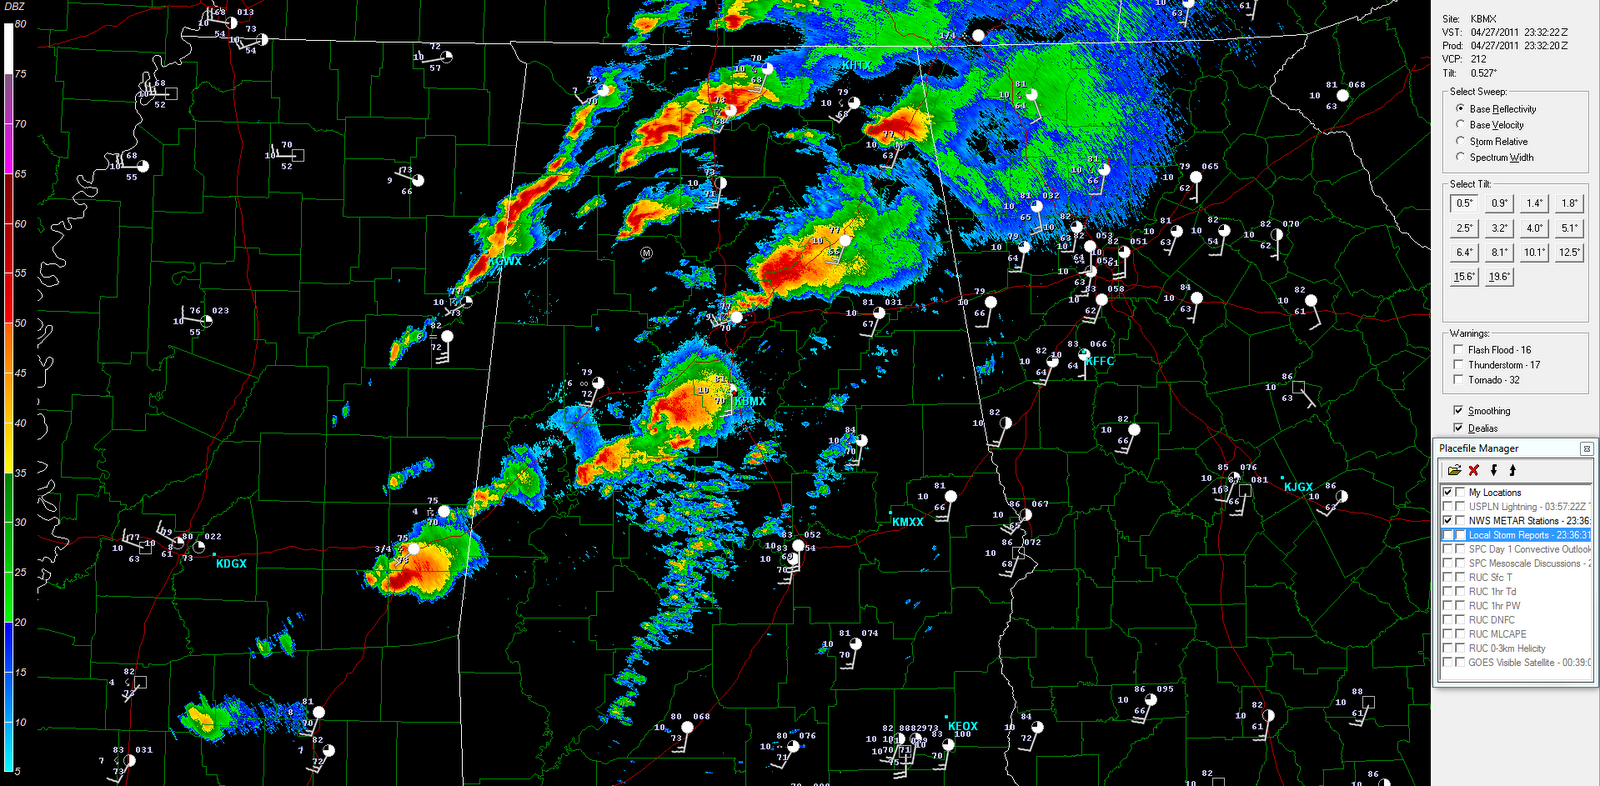 The Original Weather Blog: Severe Weather Update - Alabama1600 x 786